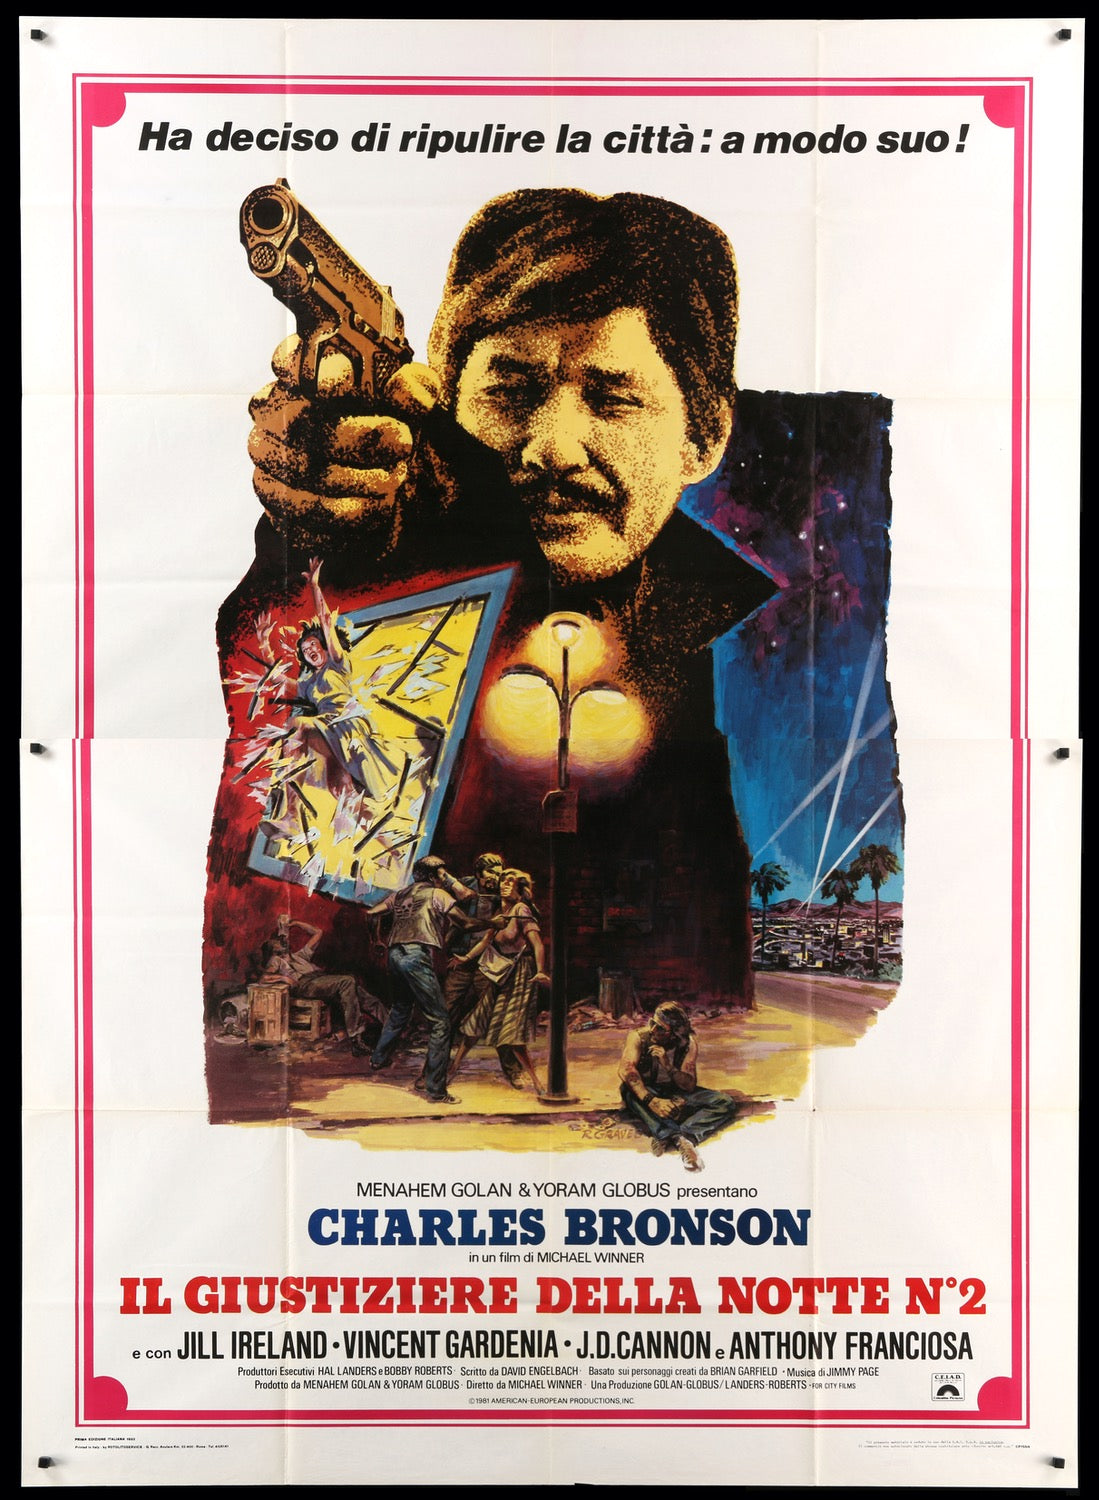 Death Wish II (1982) original movie poster for sale at Original Film Art